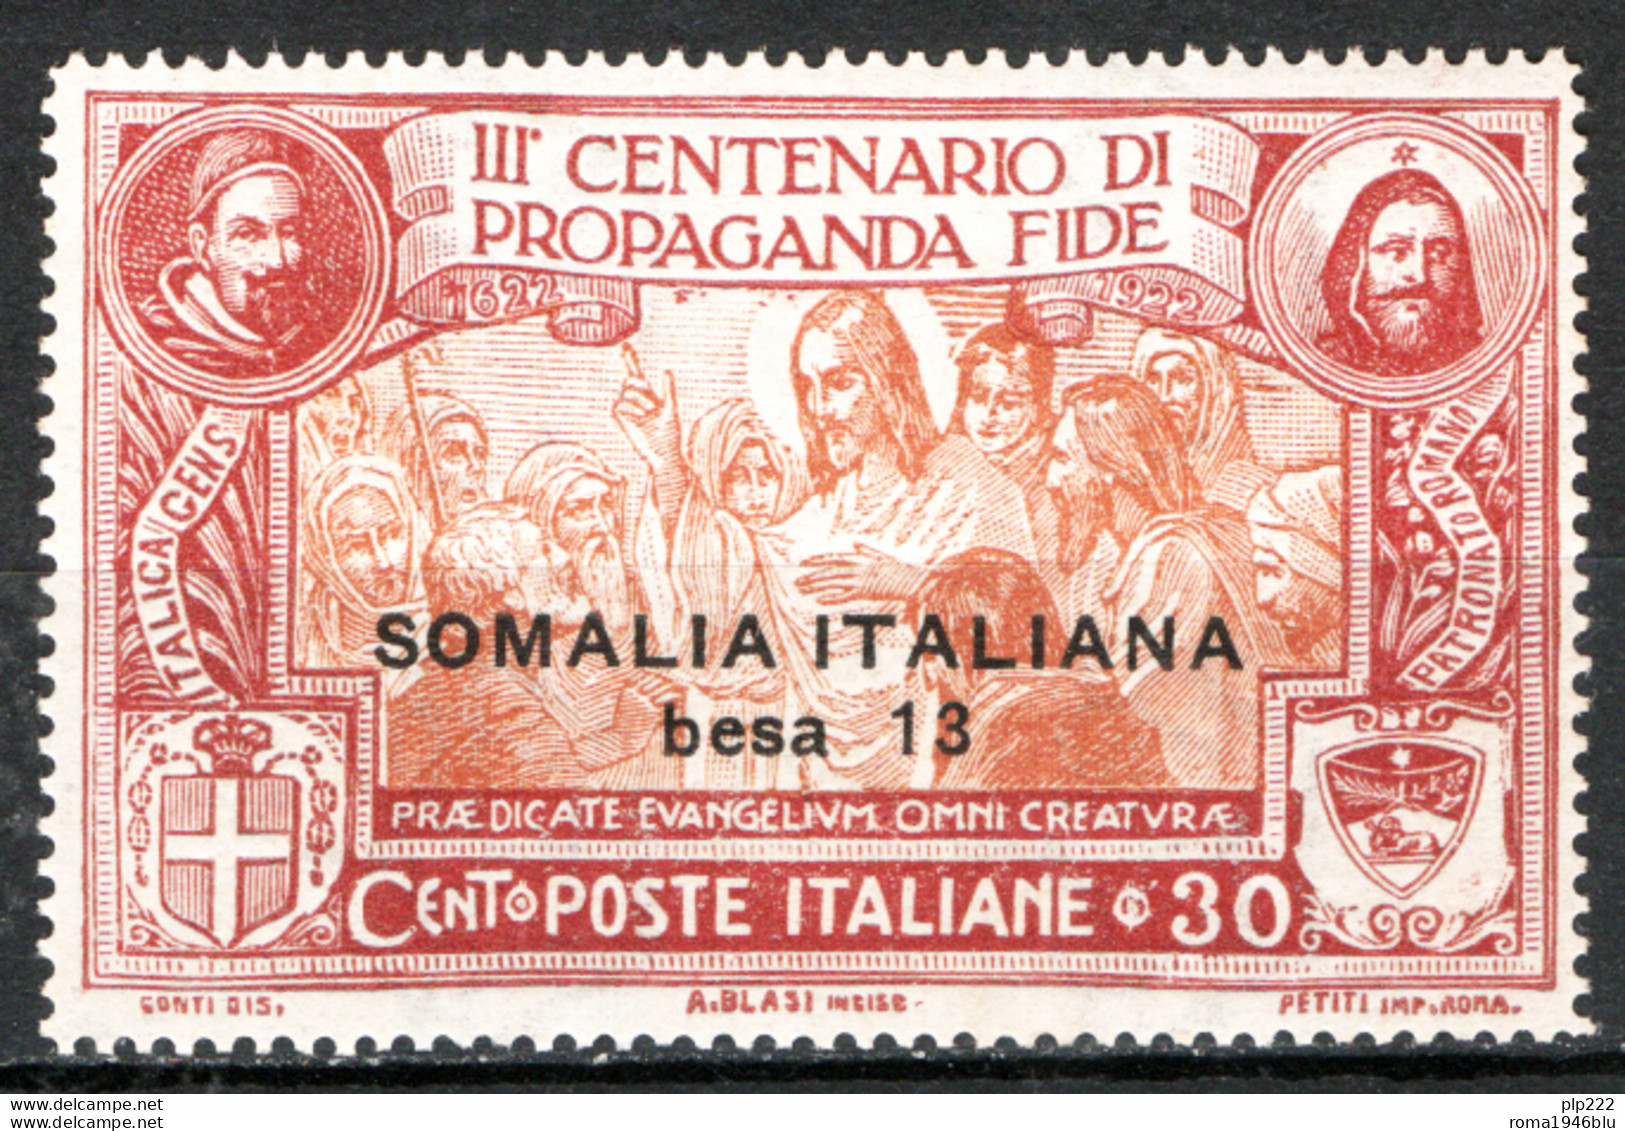 Somalia 1923 Sass.46a Ritocco **/MNH VF/F - Somalië